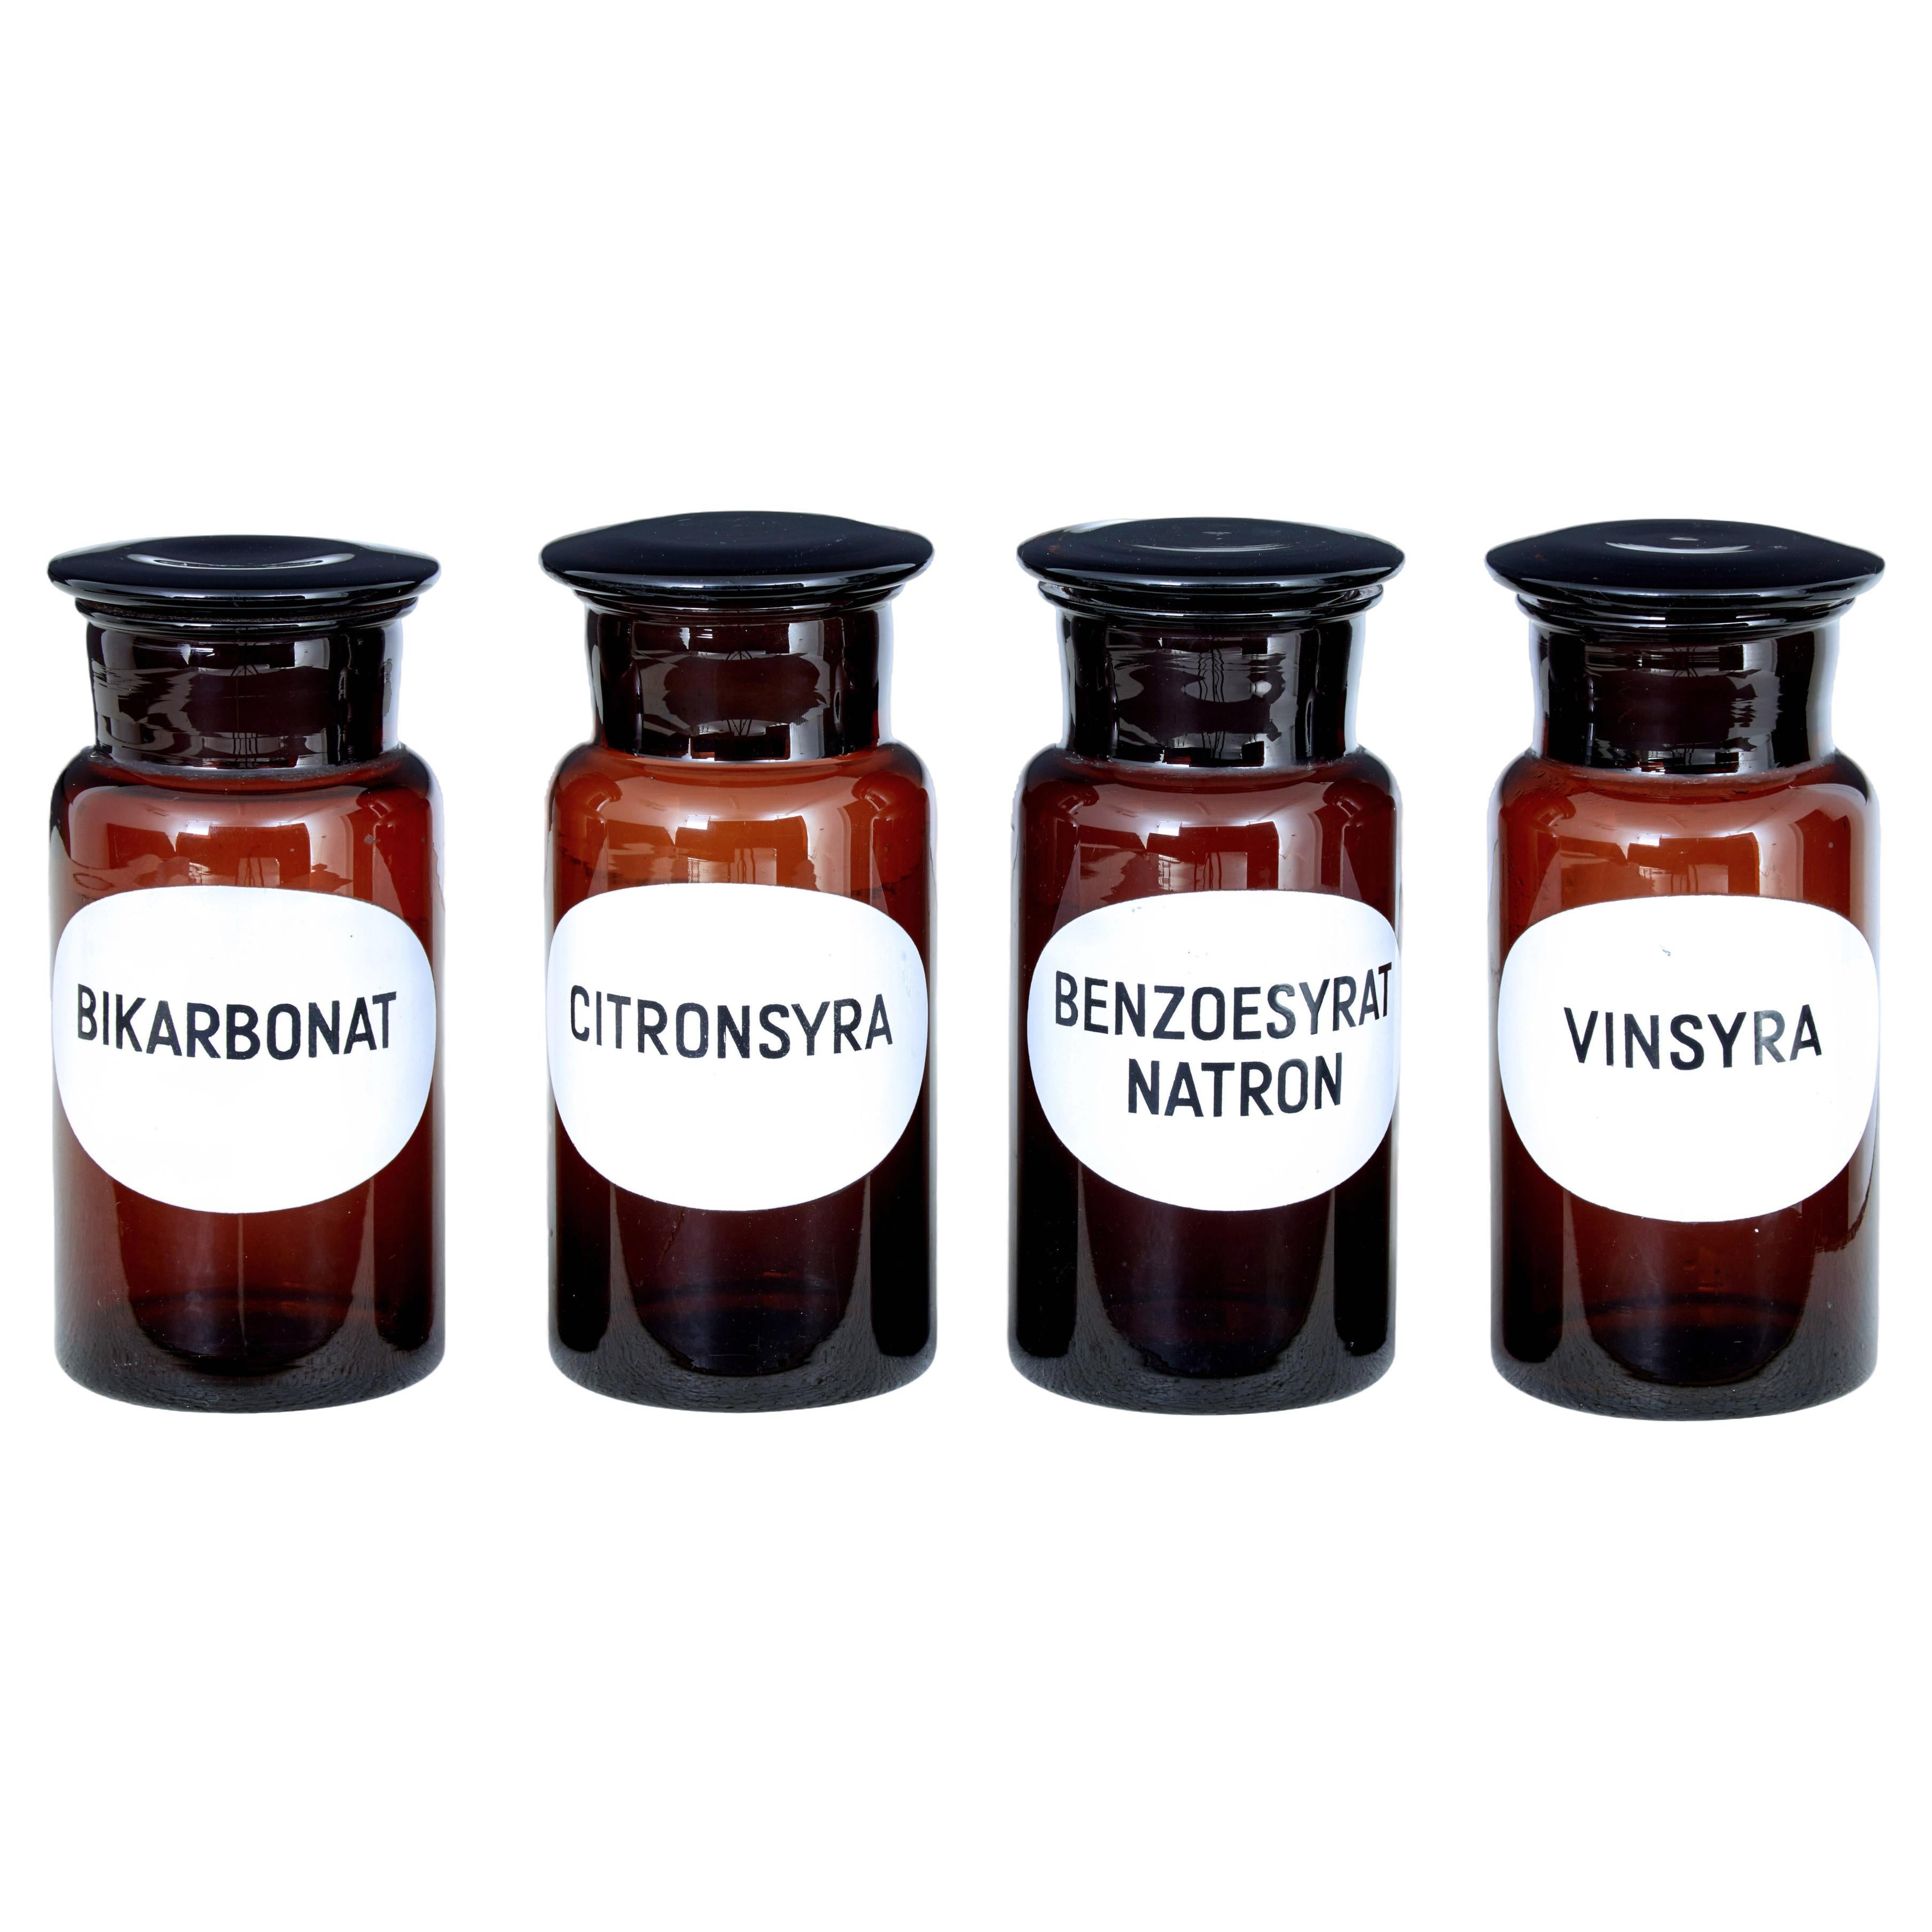 4 mid 20th century Swedish apothecary glass jars